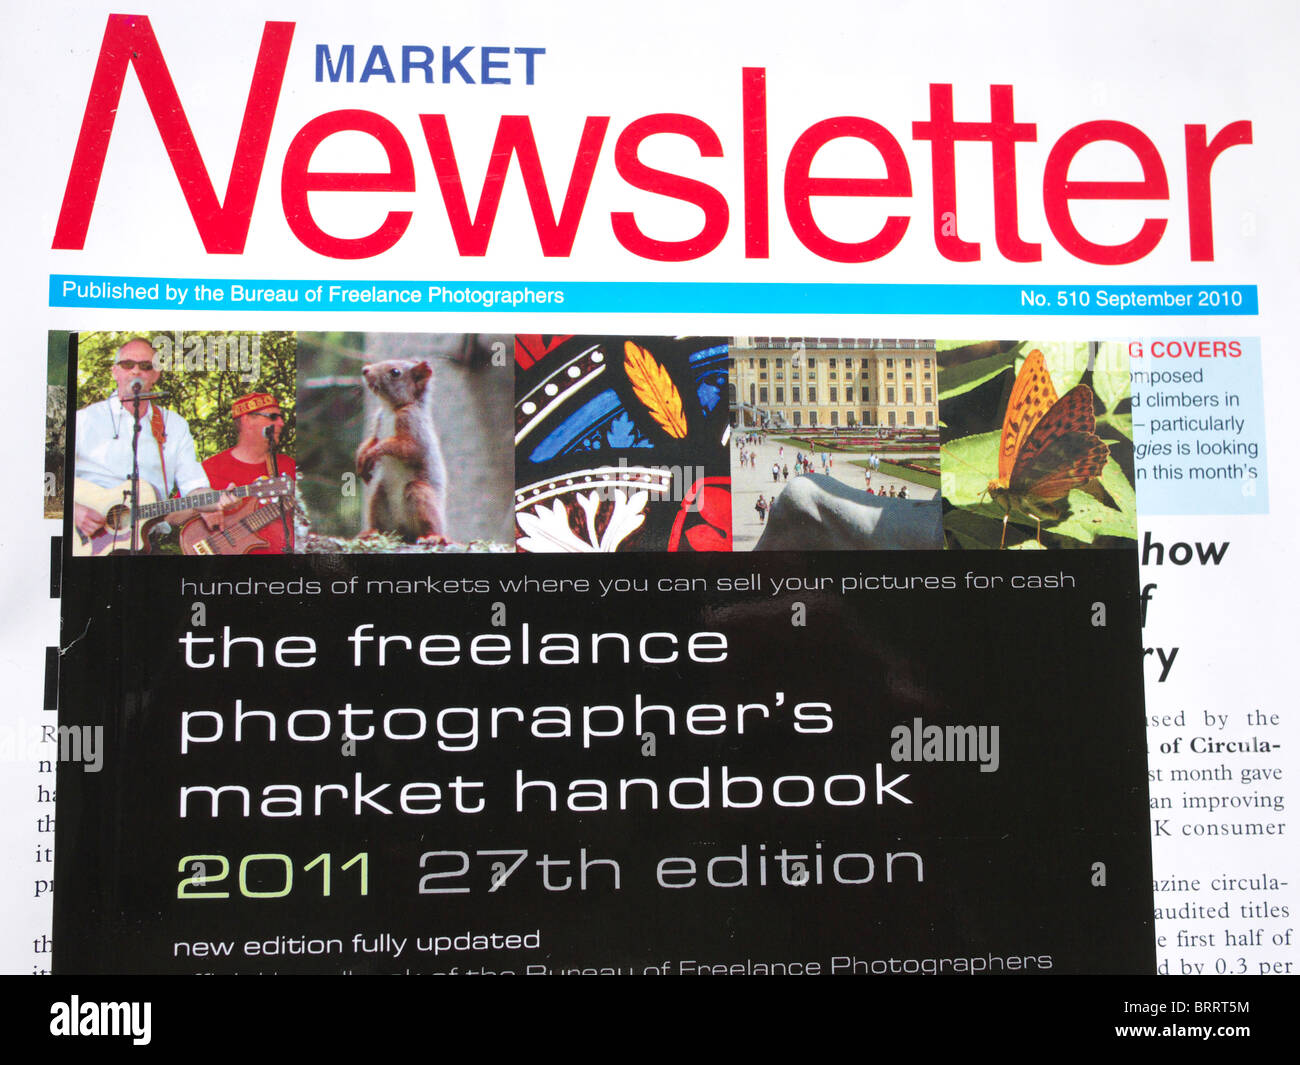 The Bureau of Freelance Photographers market handbook and newsletter